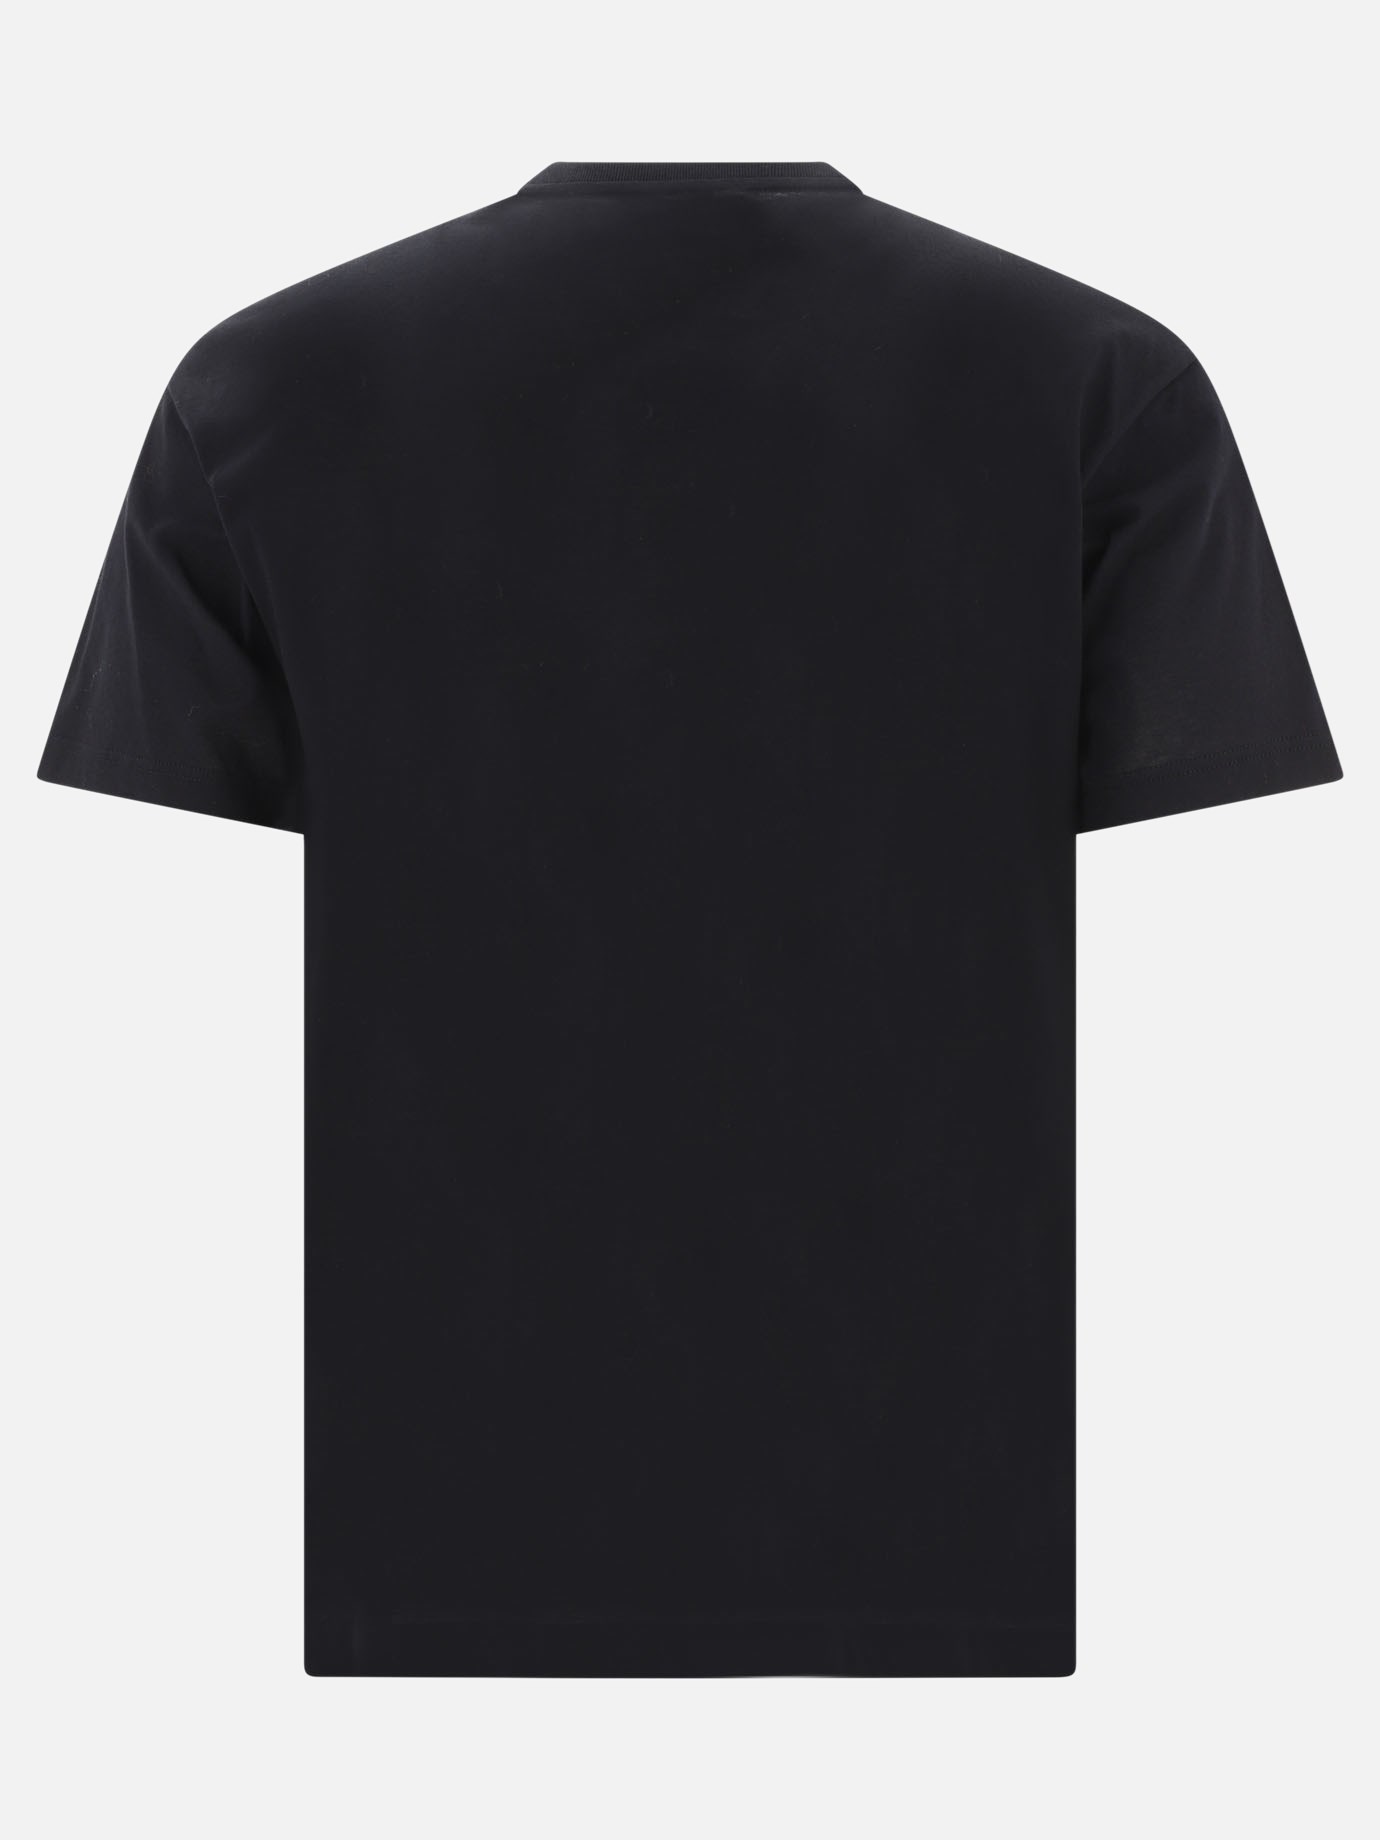 Sequin t-shirt by Prada